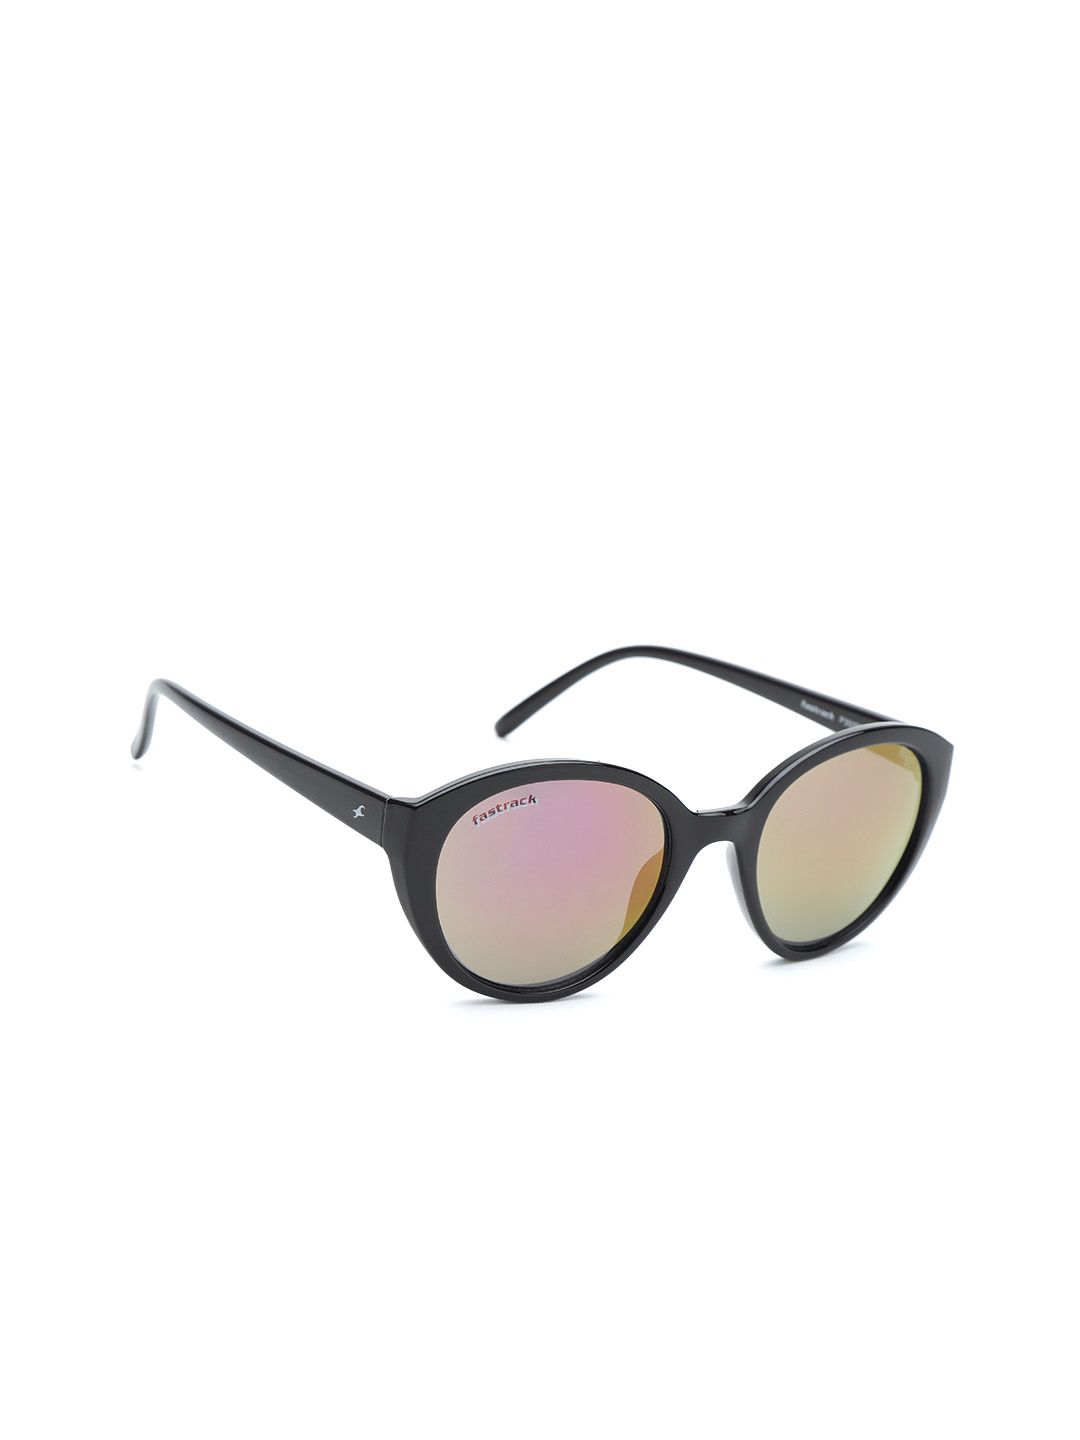 Fastrack Women Mirrored Cateye Sunglasses NBP350PR1F Price in India